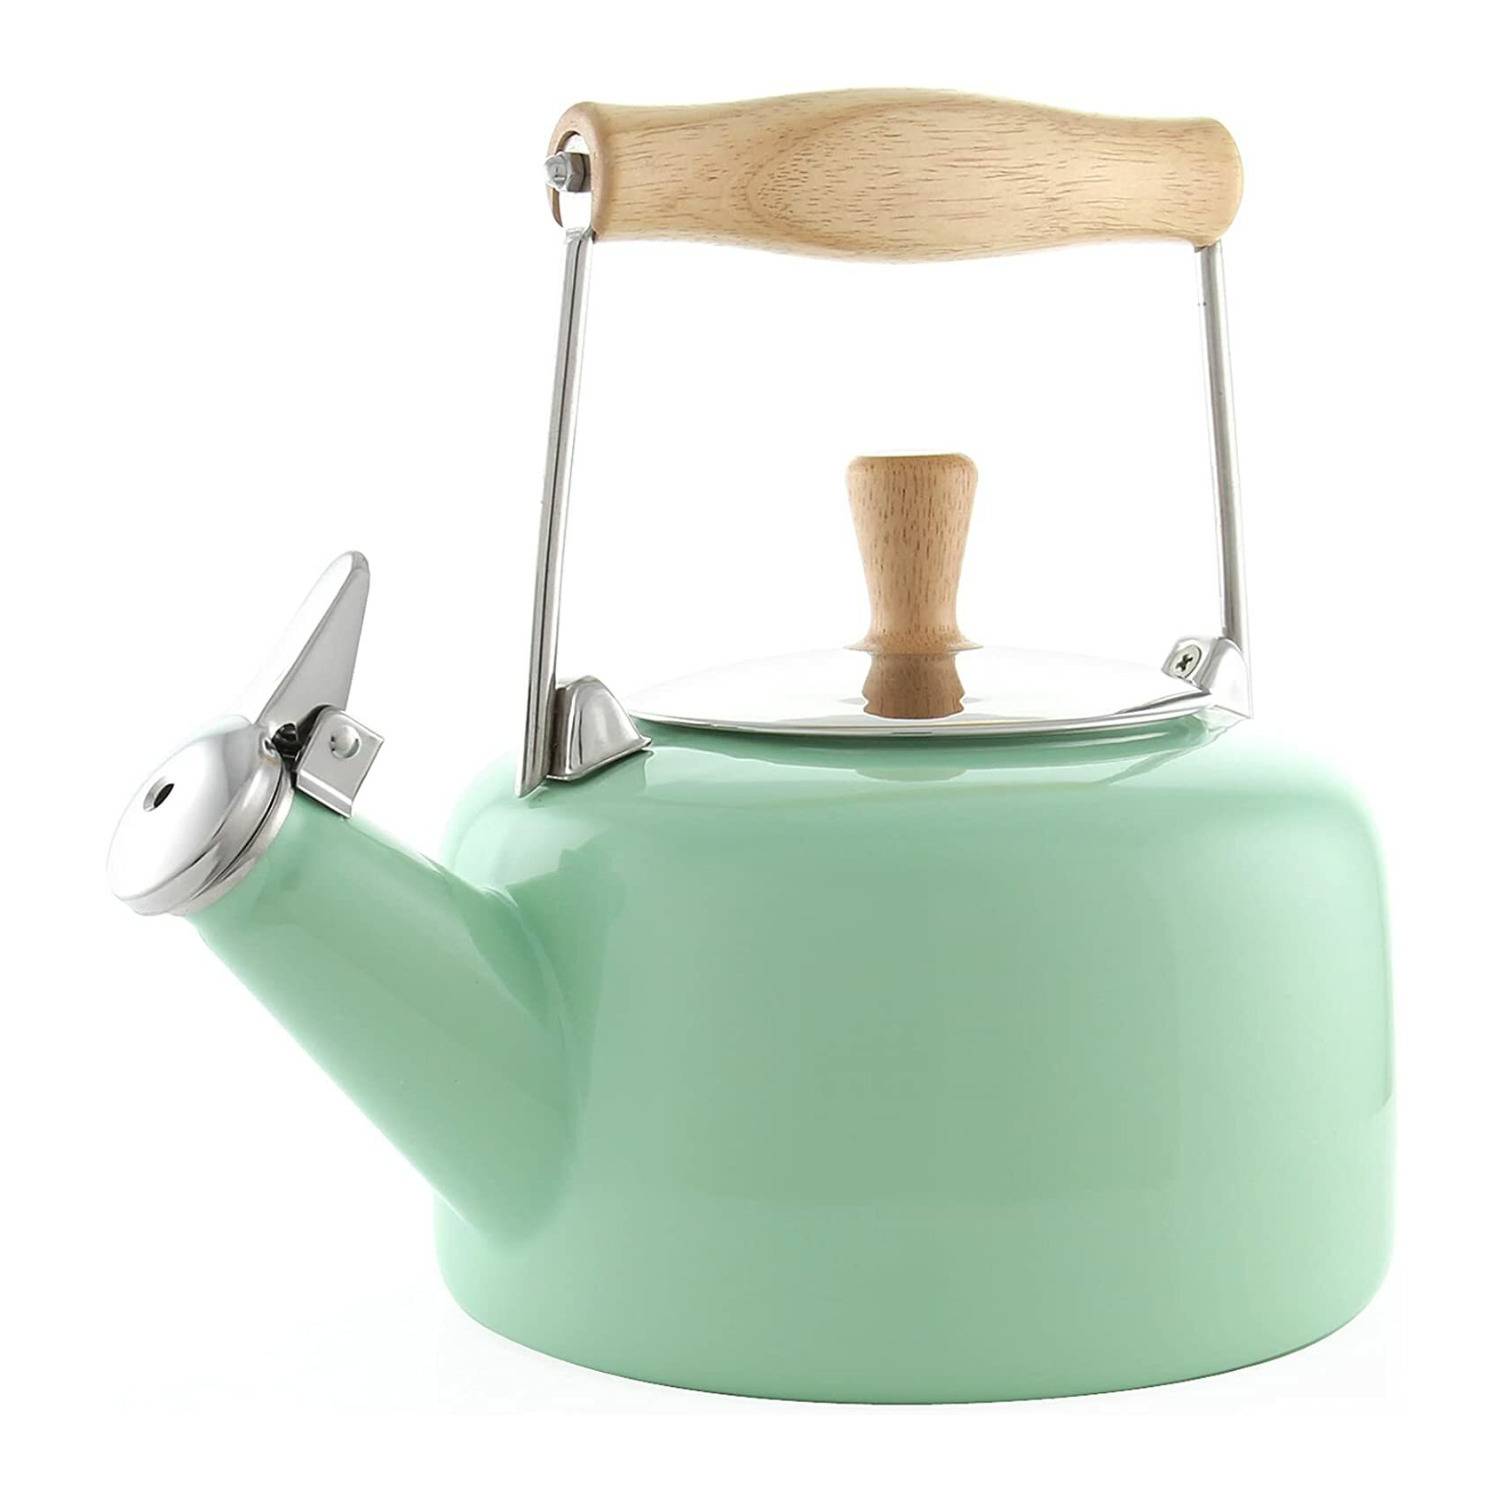 Chantal 1.4-Quart Enamel-on-Steel Sven Tea Kettle with Wood Handle (Mint Green)